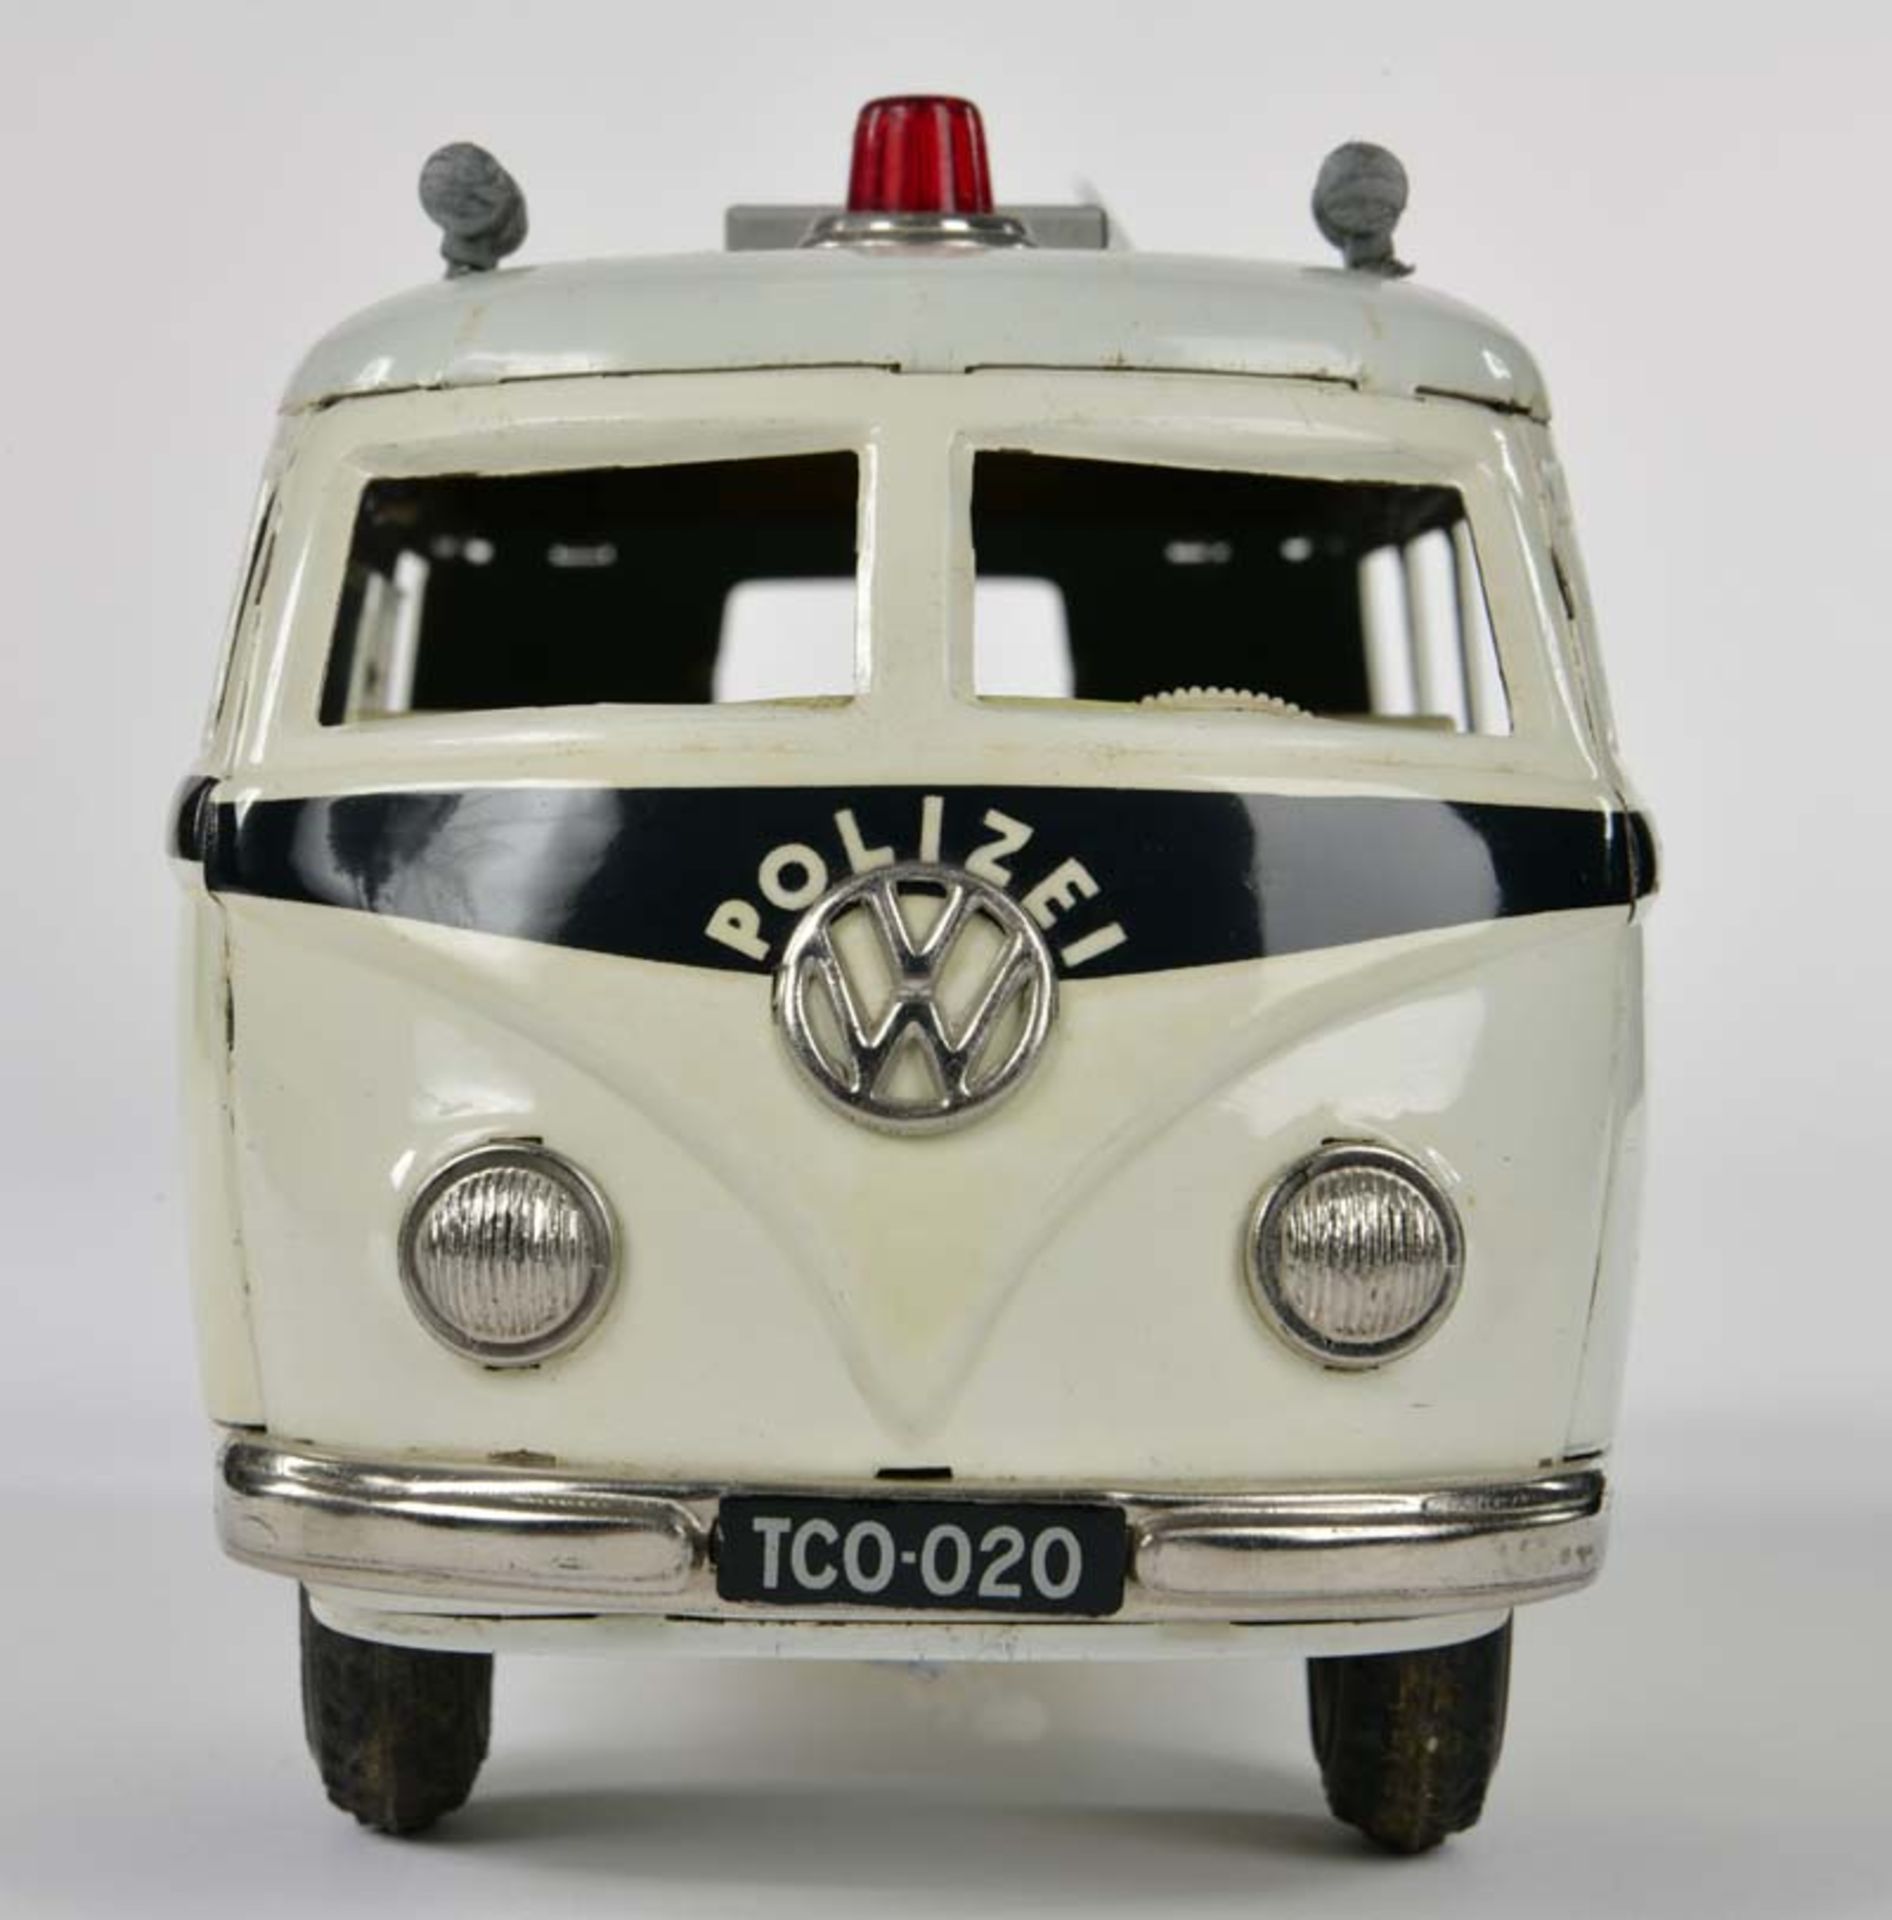 Tippco, VW Bus "Polizei", W.-Germany, 23 cm, friction ok, handpainted, C 1 - Image 4 of 4